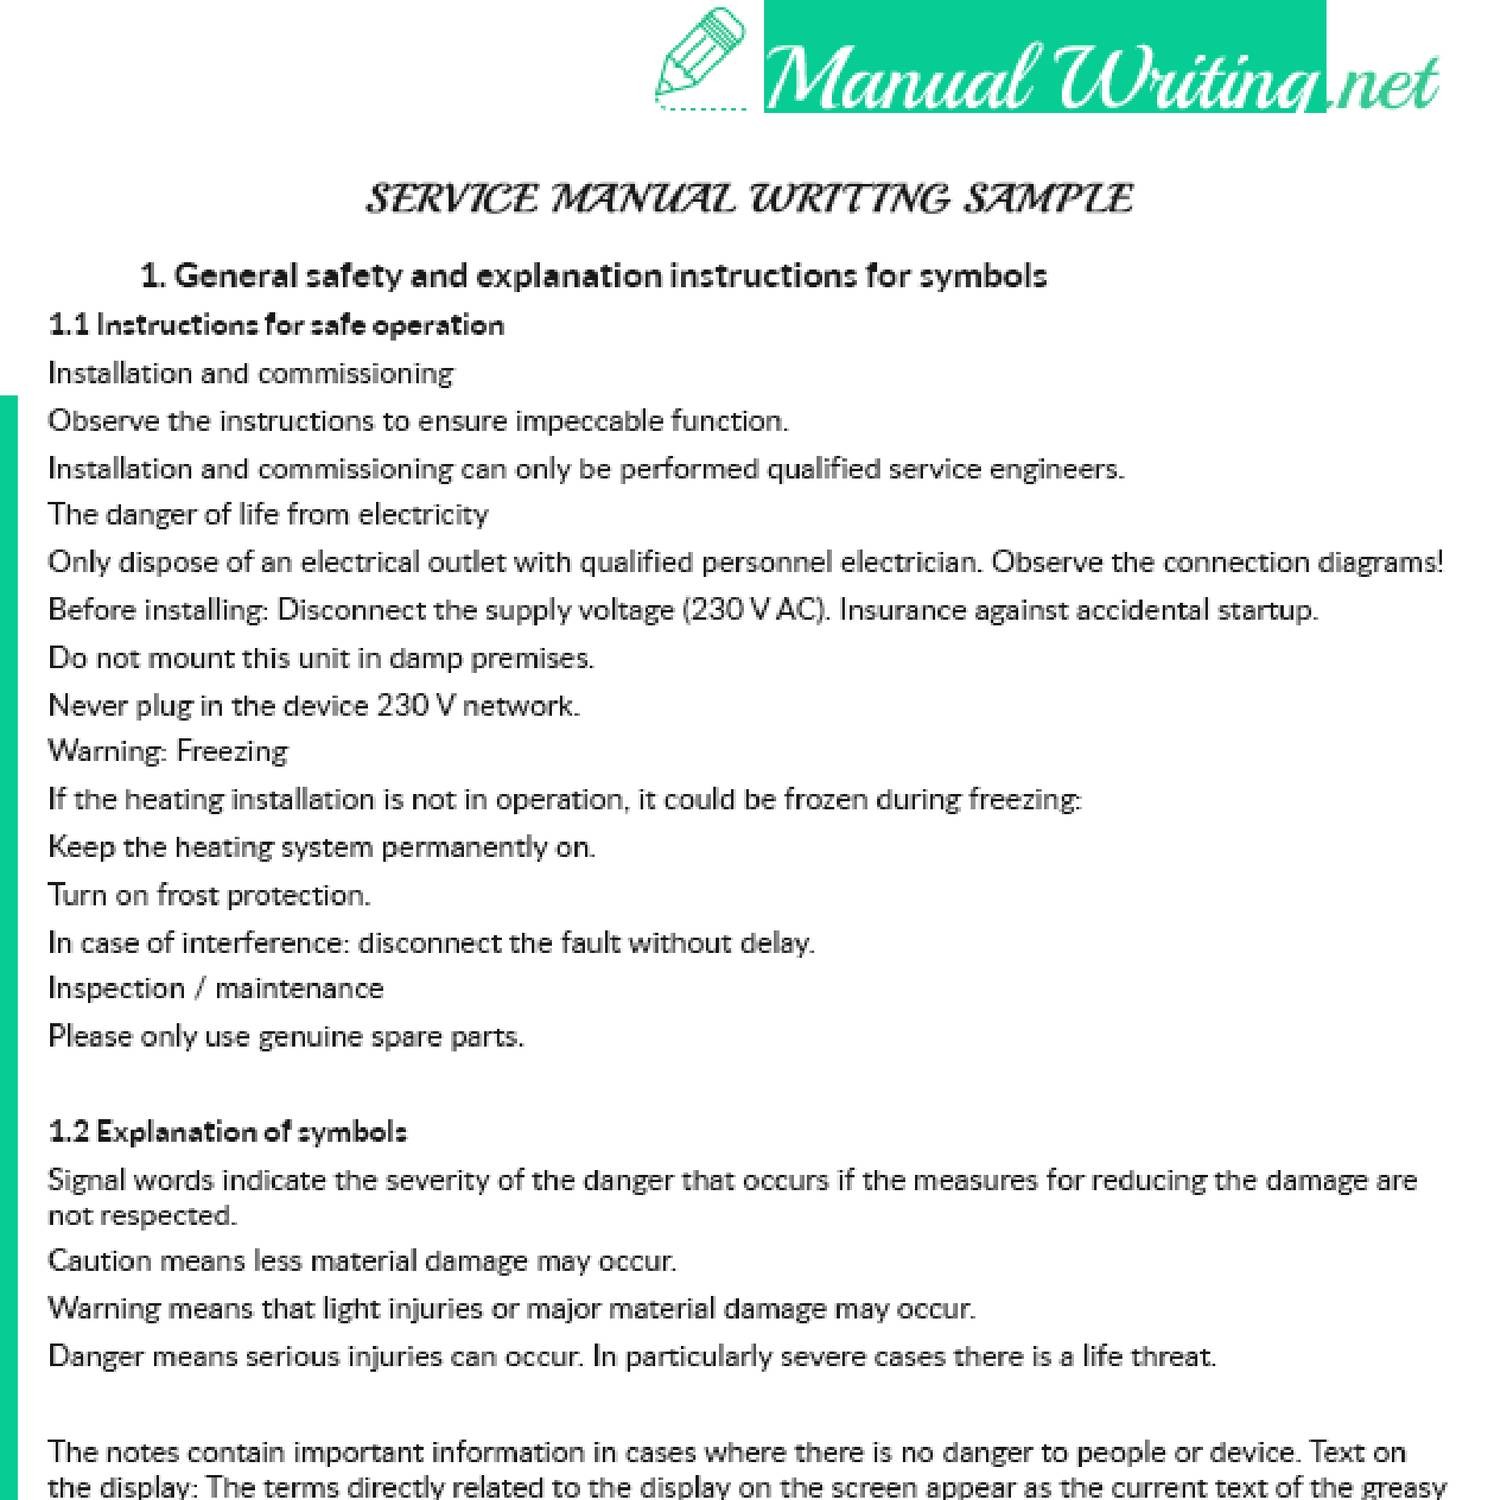 Service Manual Writing Sample.pdf | DocDroid